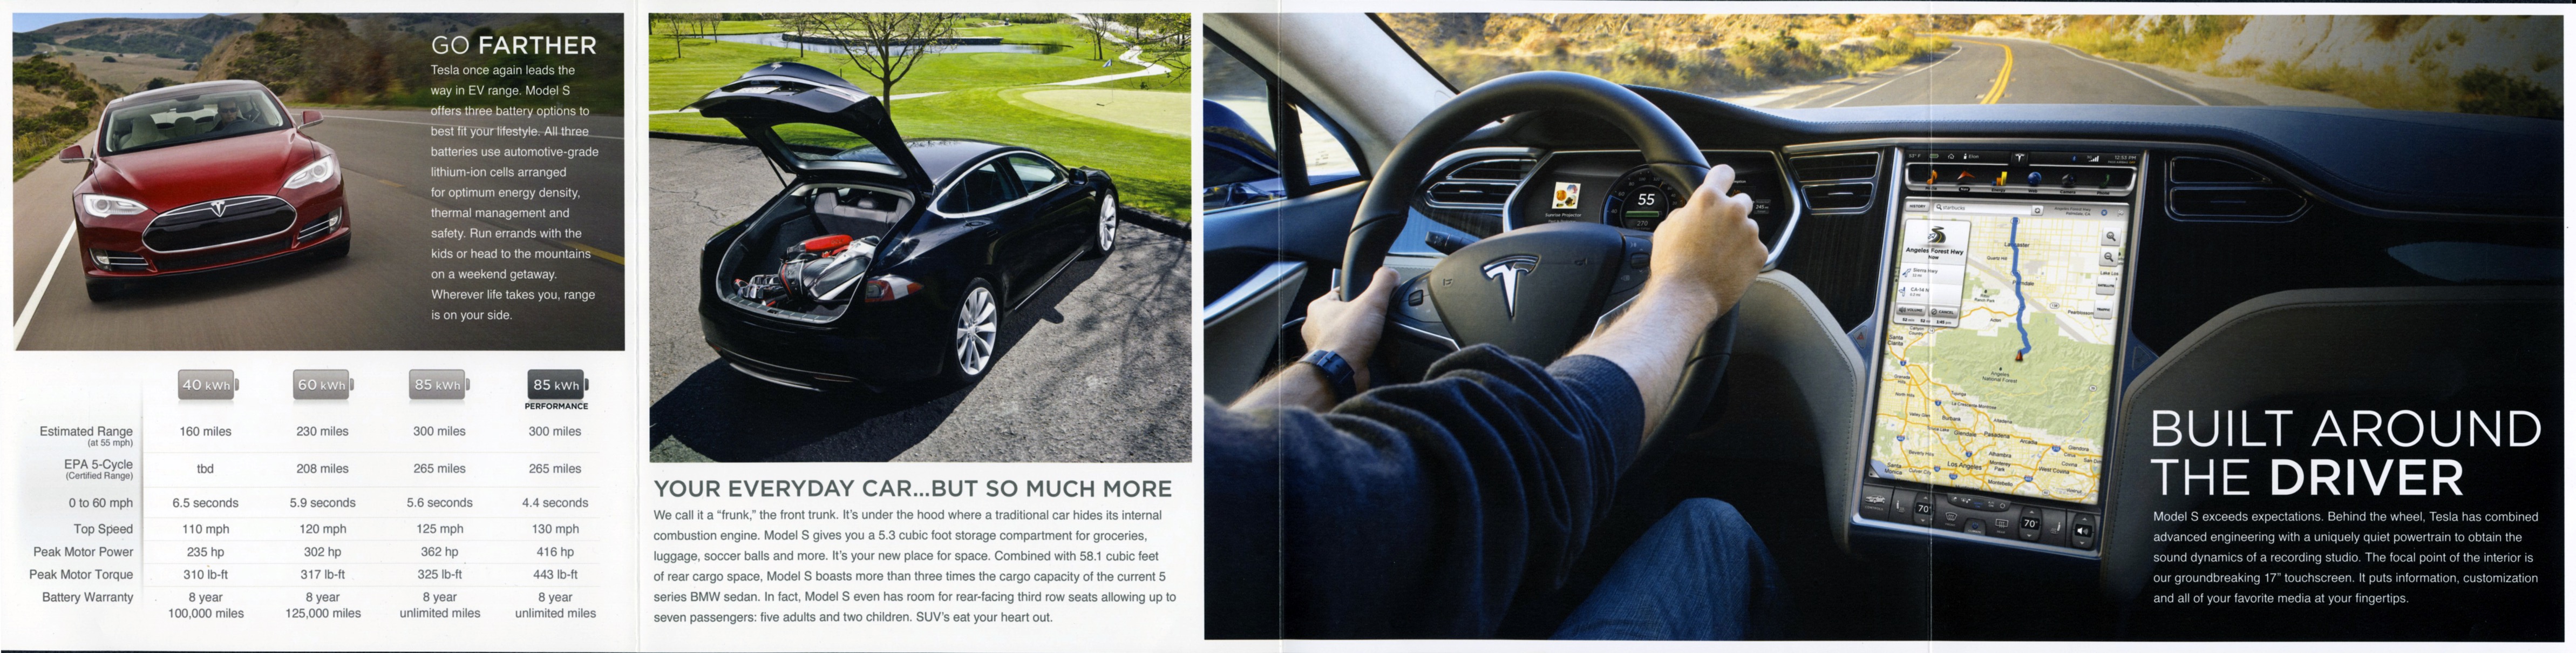 2013 Tesla Model S Brochure Page 1